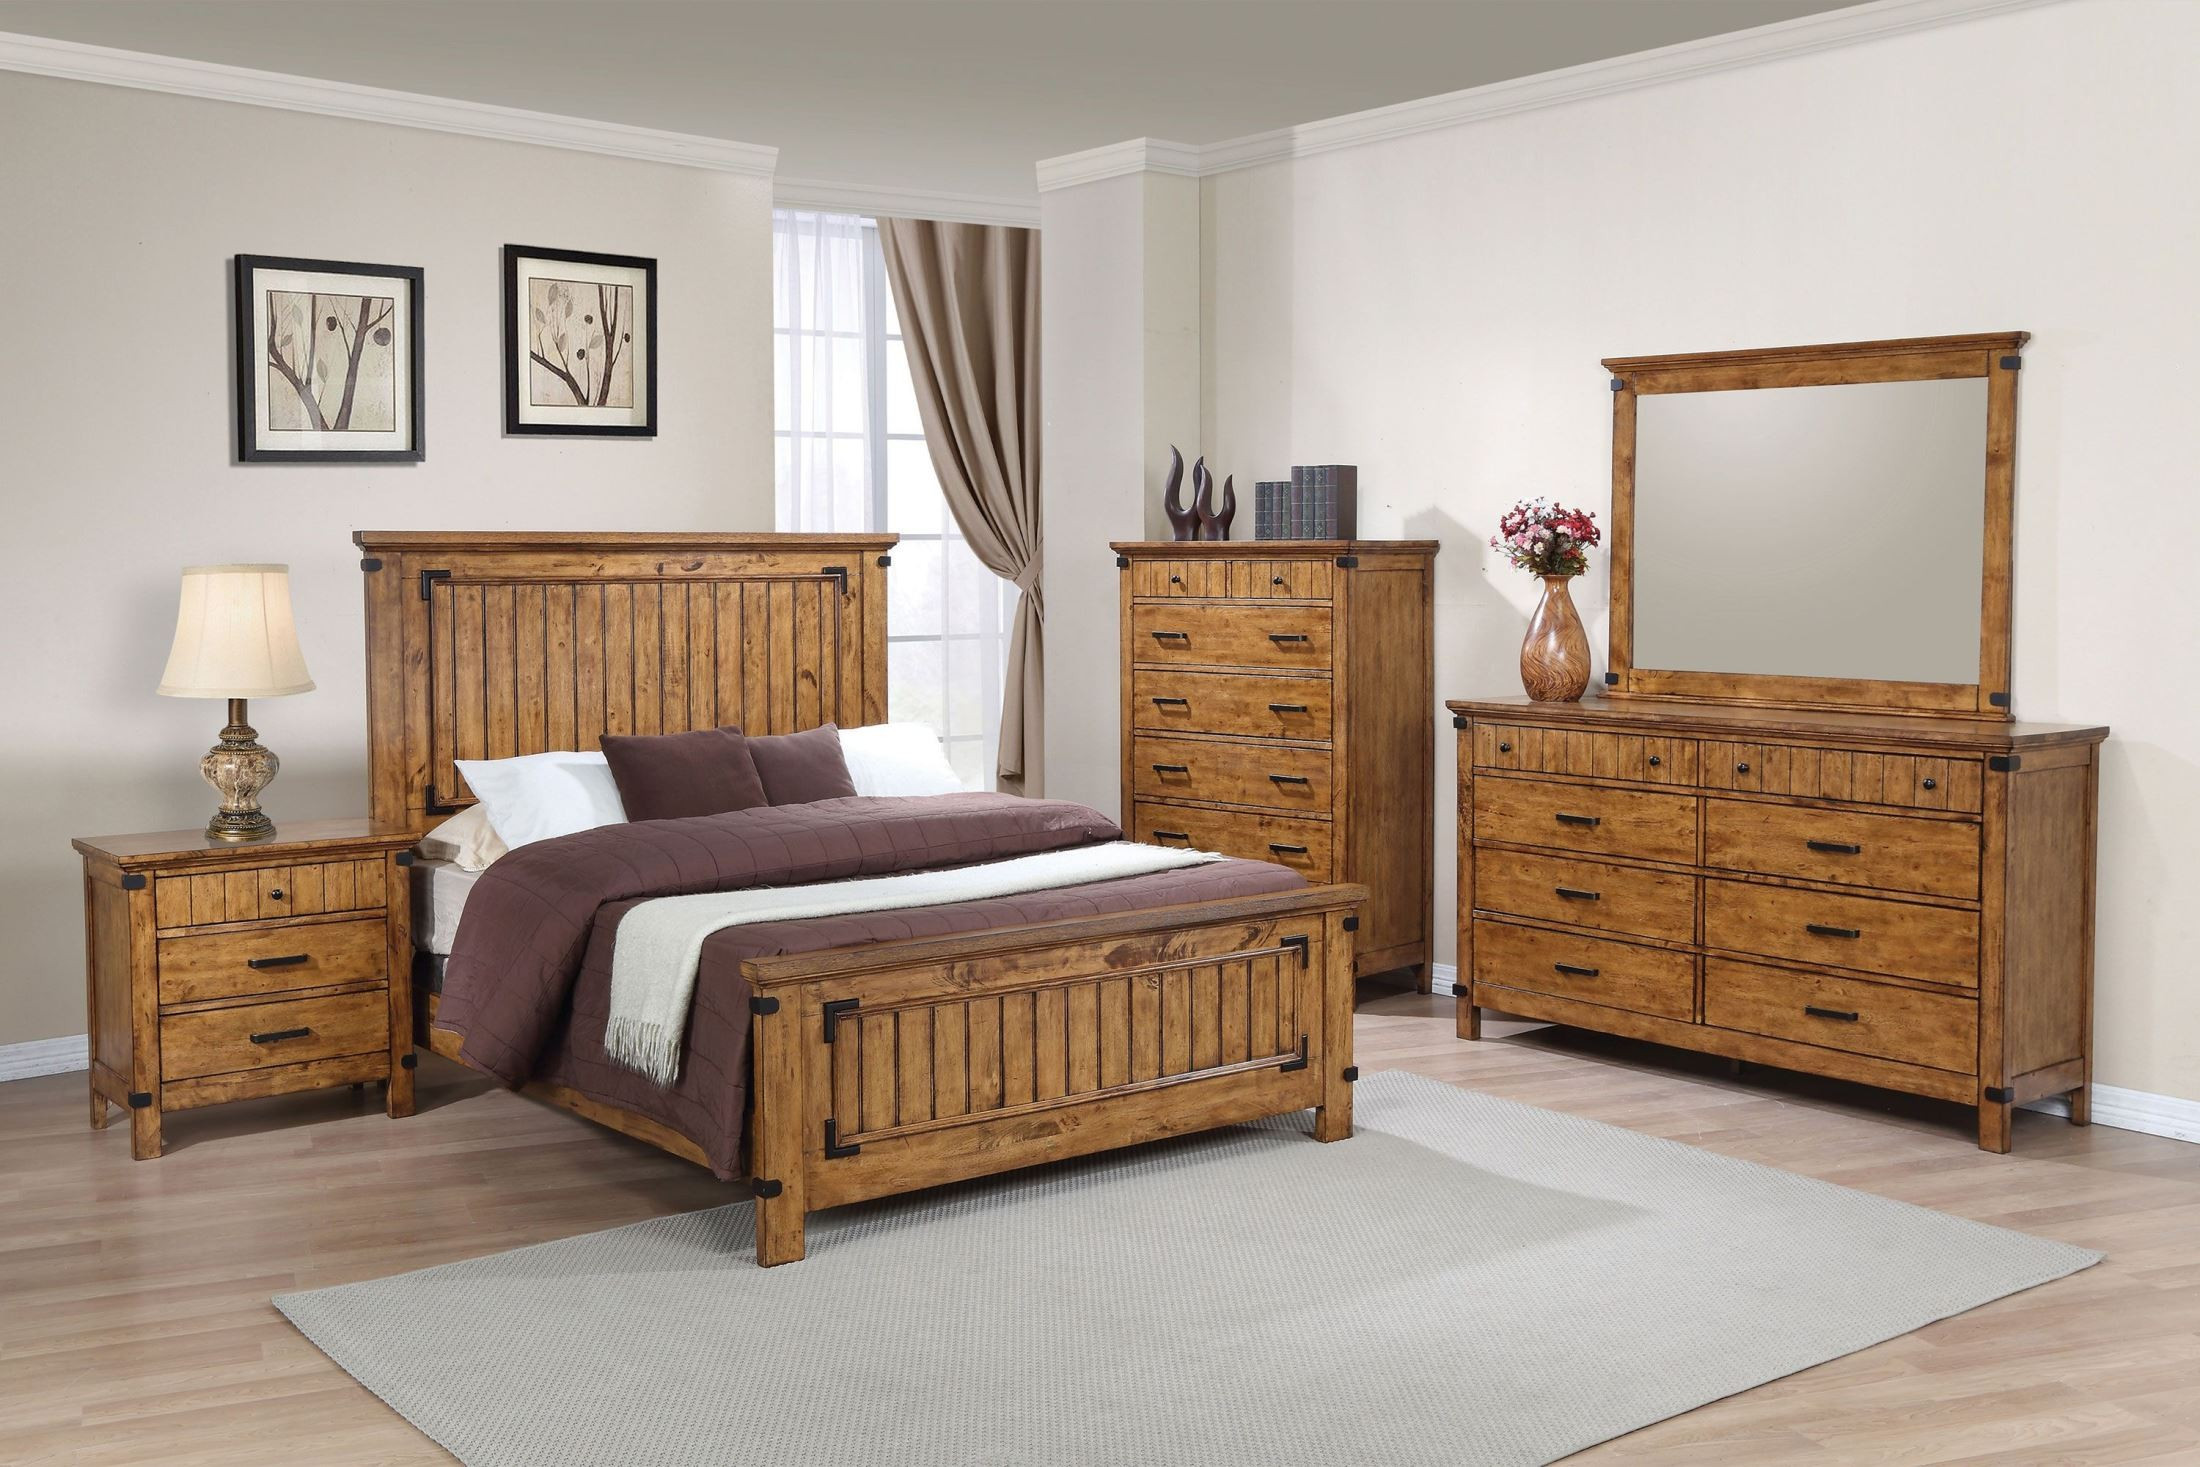 Cheap Rustic Bedroom Furniture Sets
 Brenner Rustic Honey Panel Bedroom Set from Coaster